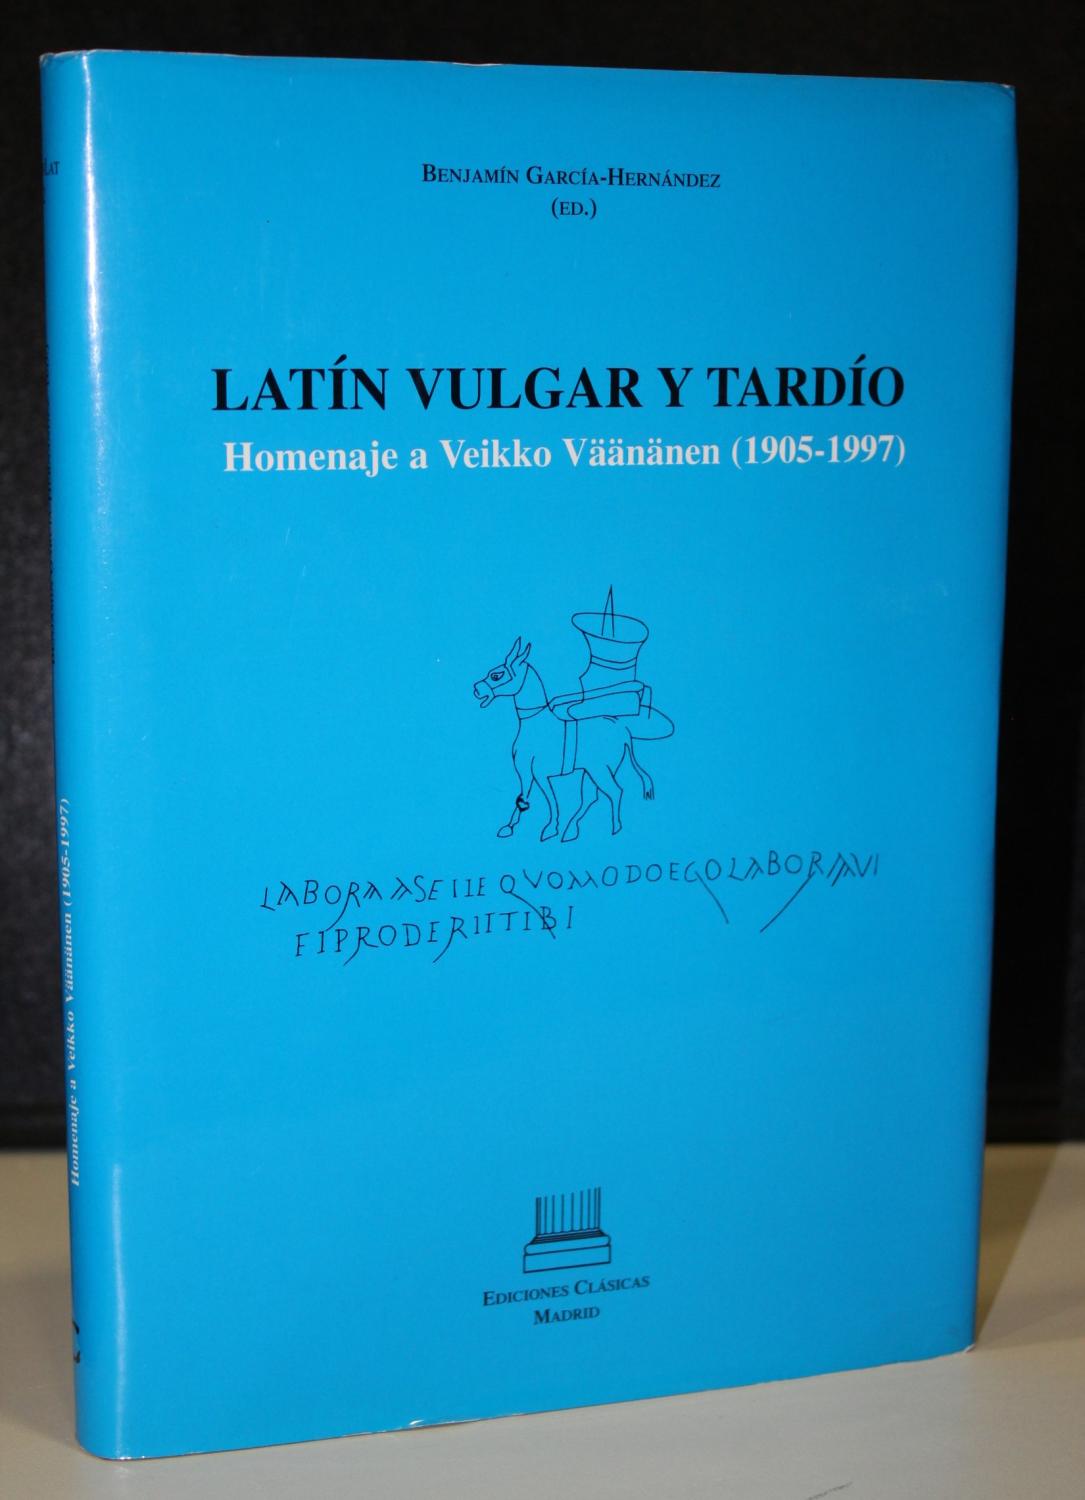 Latín vulgar y tardío. Homenaje a Veikko Väänänen (1905-1997). - García-Hernández, Benjamín (Ed.)